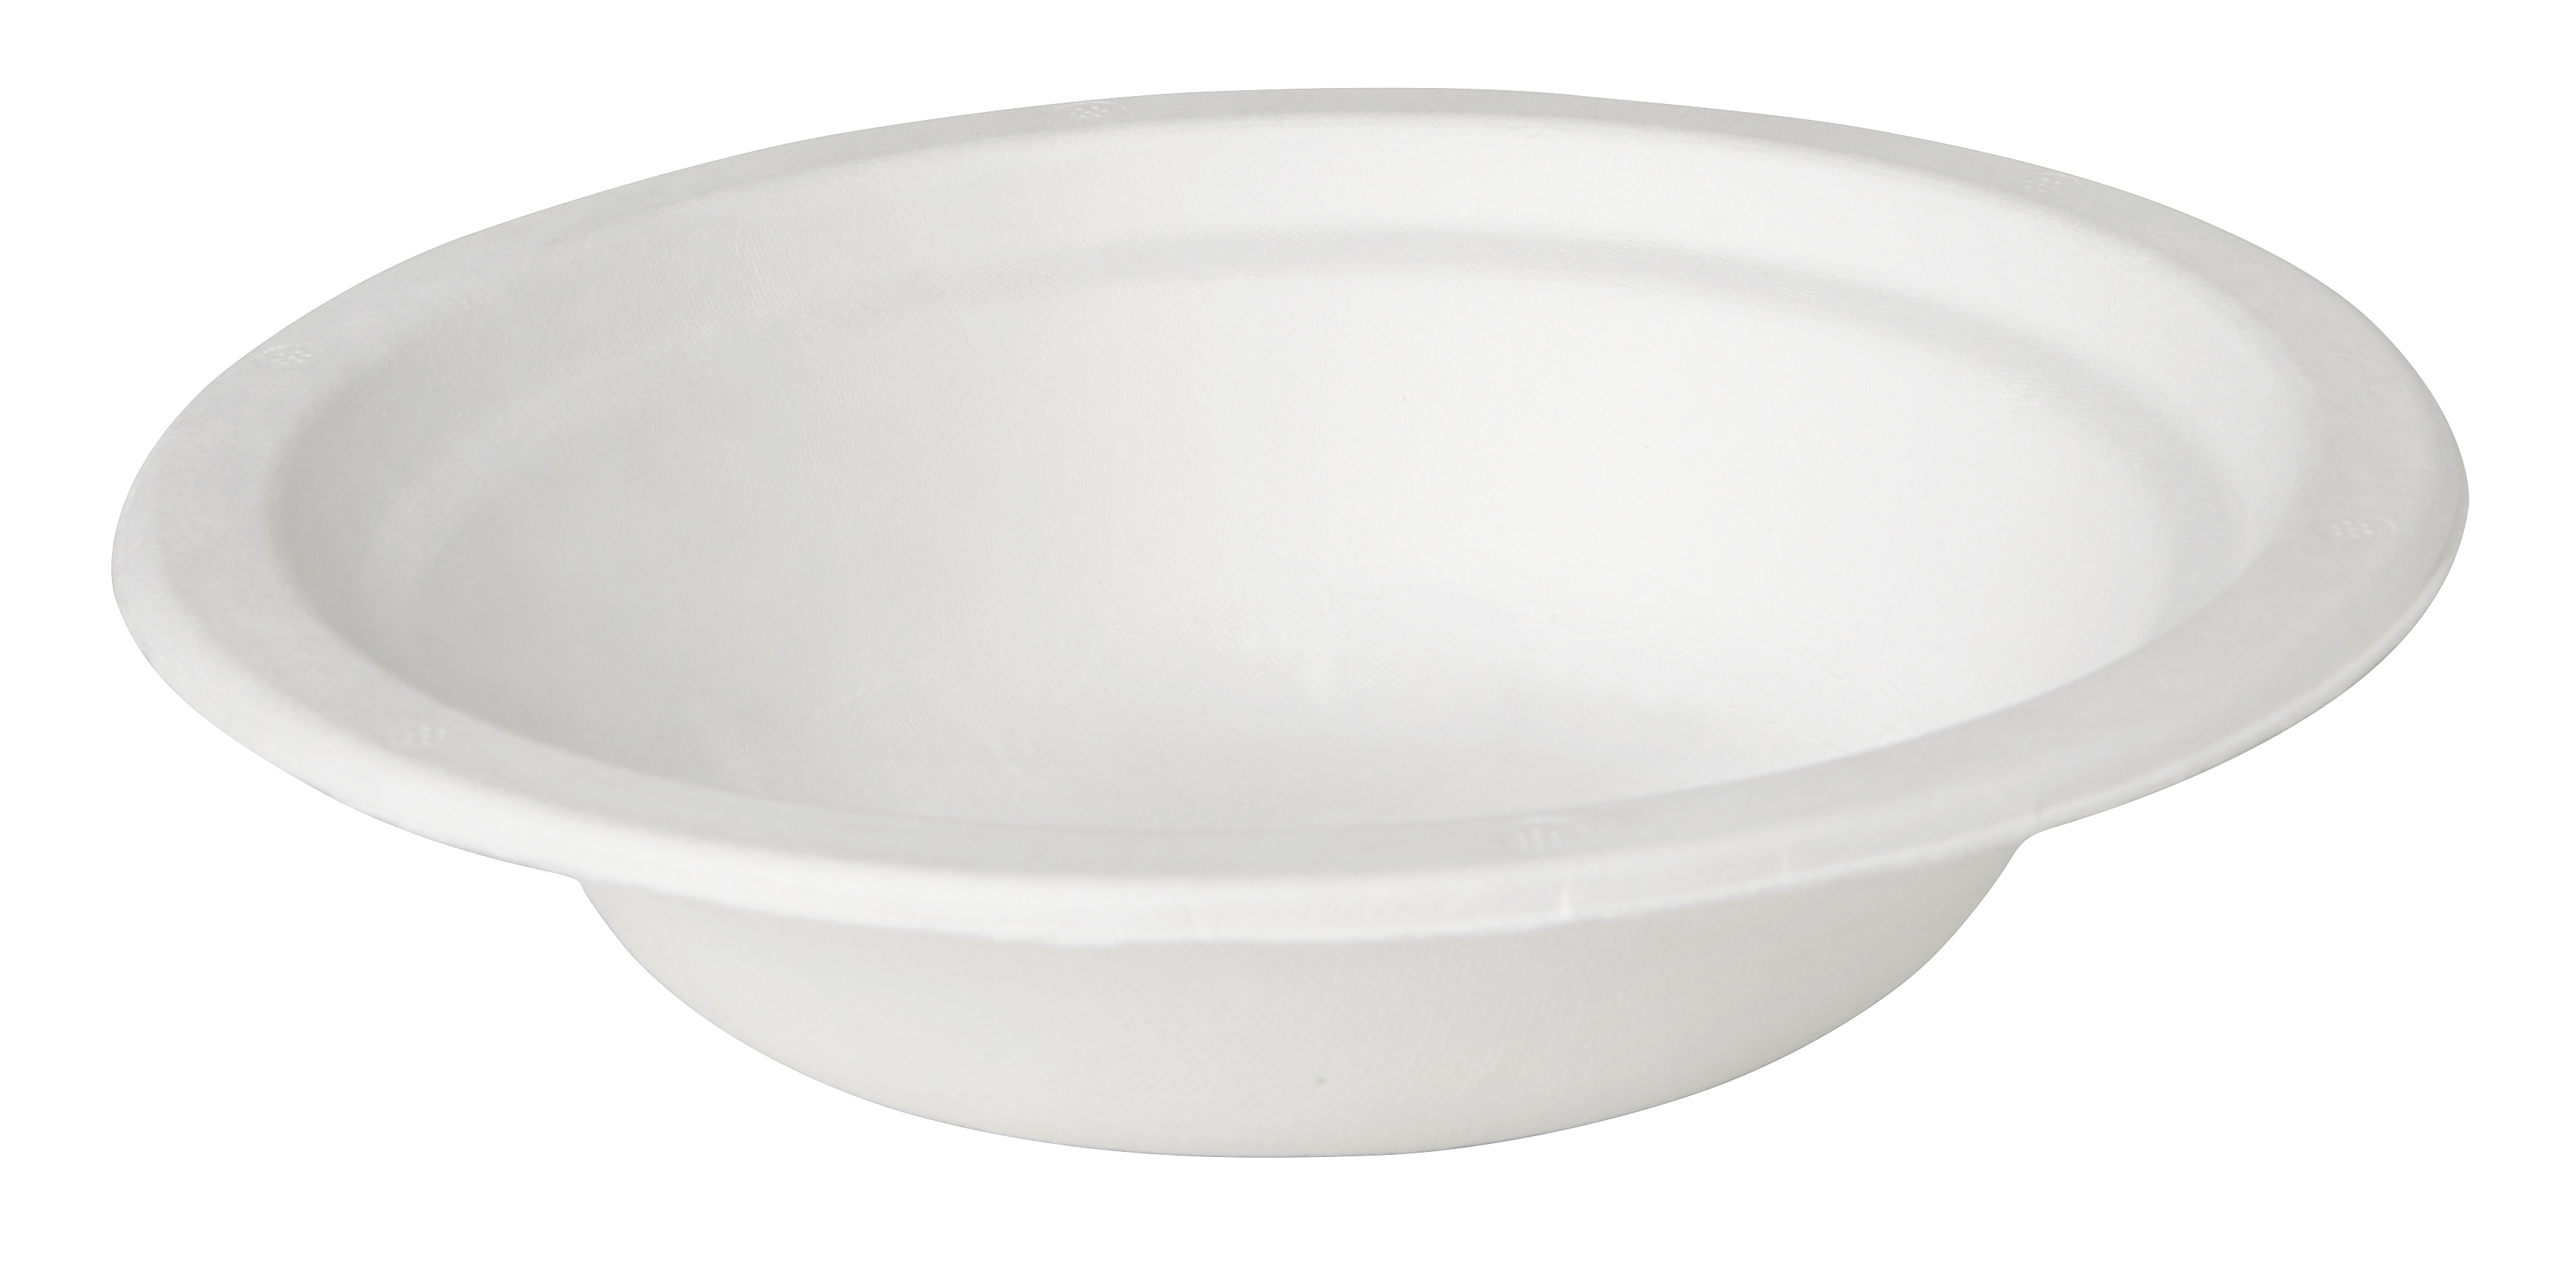 Round bowl. Био тарелка (сахарный тростник), глубокая 0,6л, 50/1000шт/кор. Тарелка столовая 23см сахарный тростник 50шт/рукав. Duni ecoecho 1/2 GN.